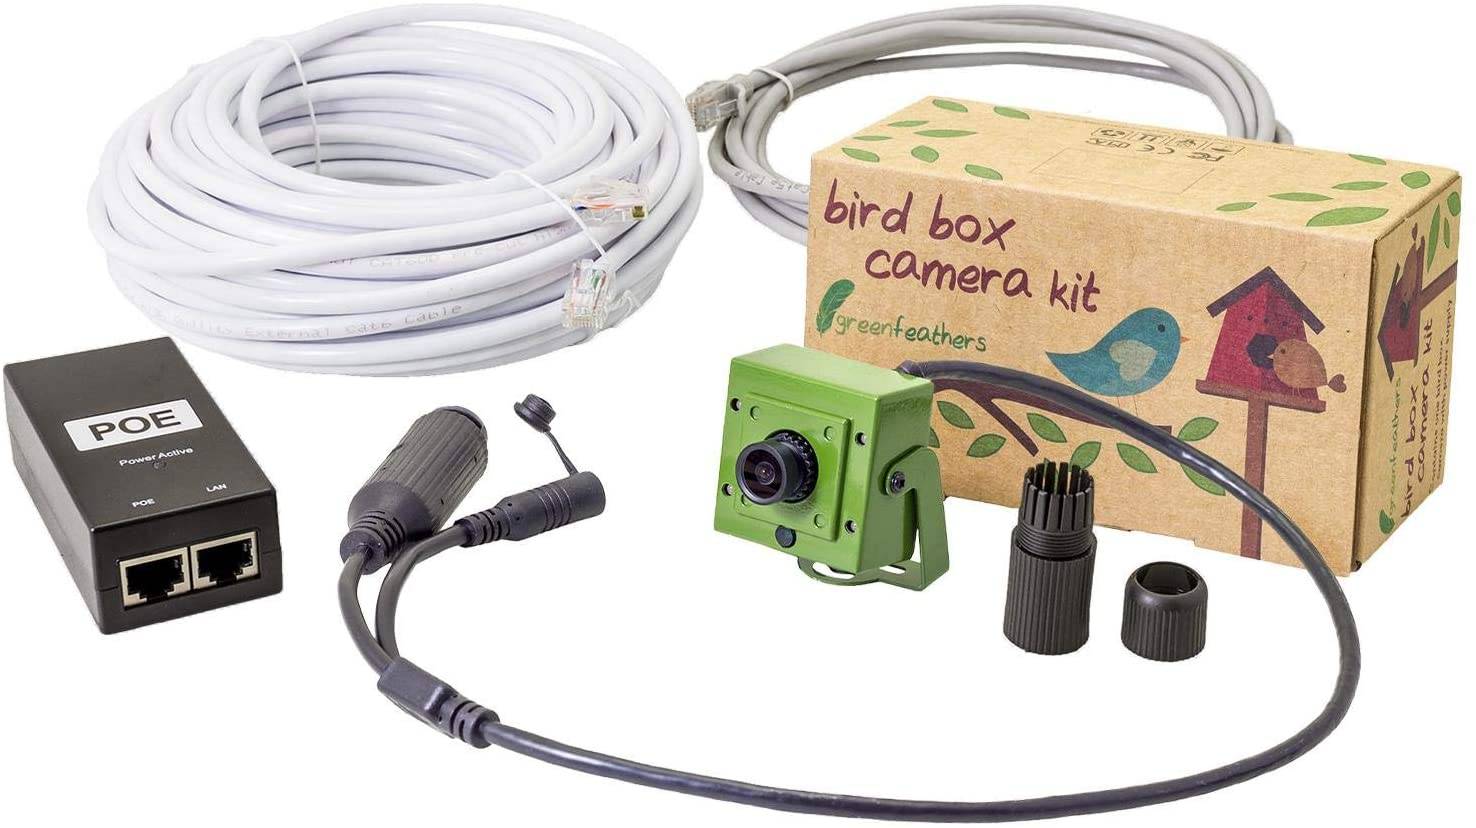 Green Feathers Birdbox Camera